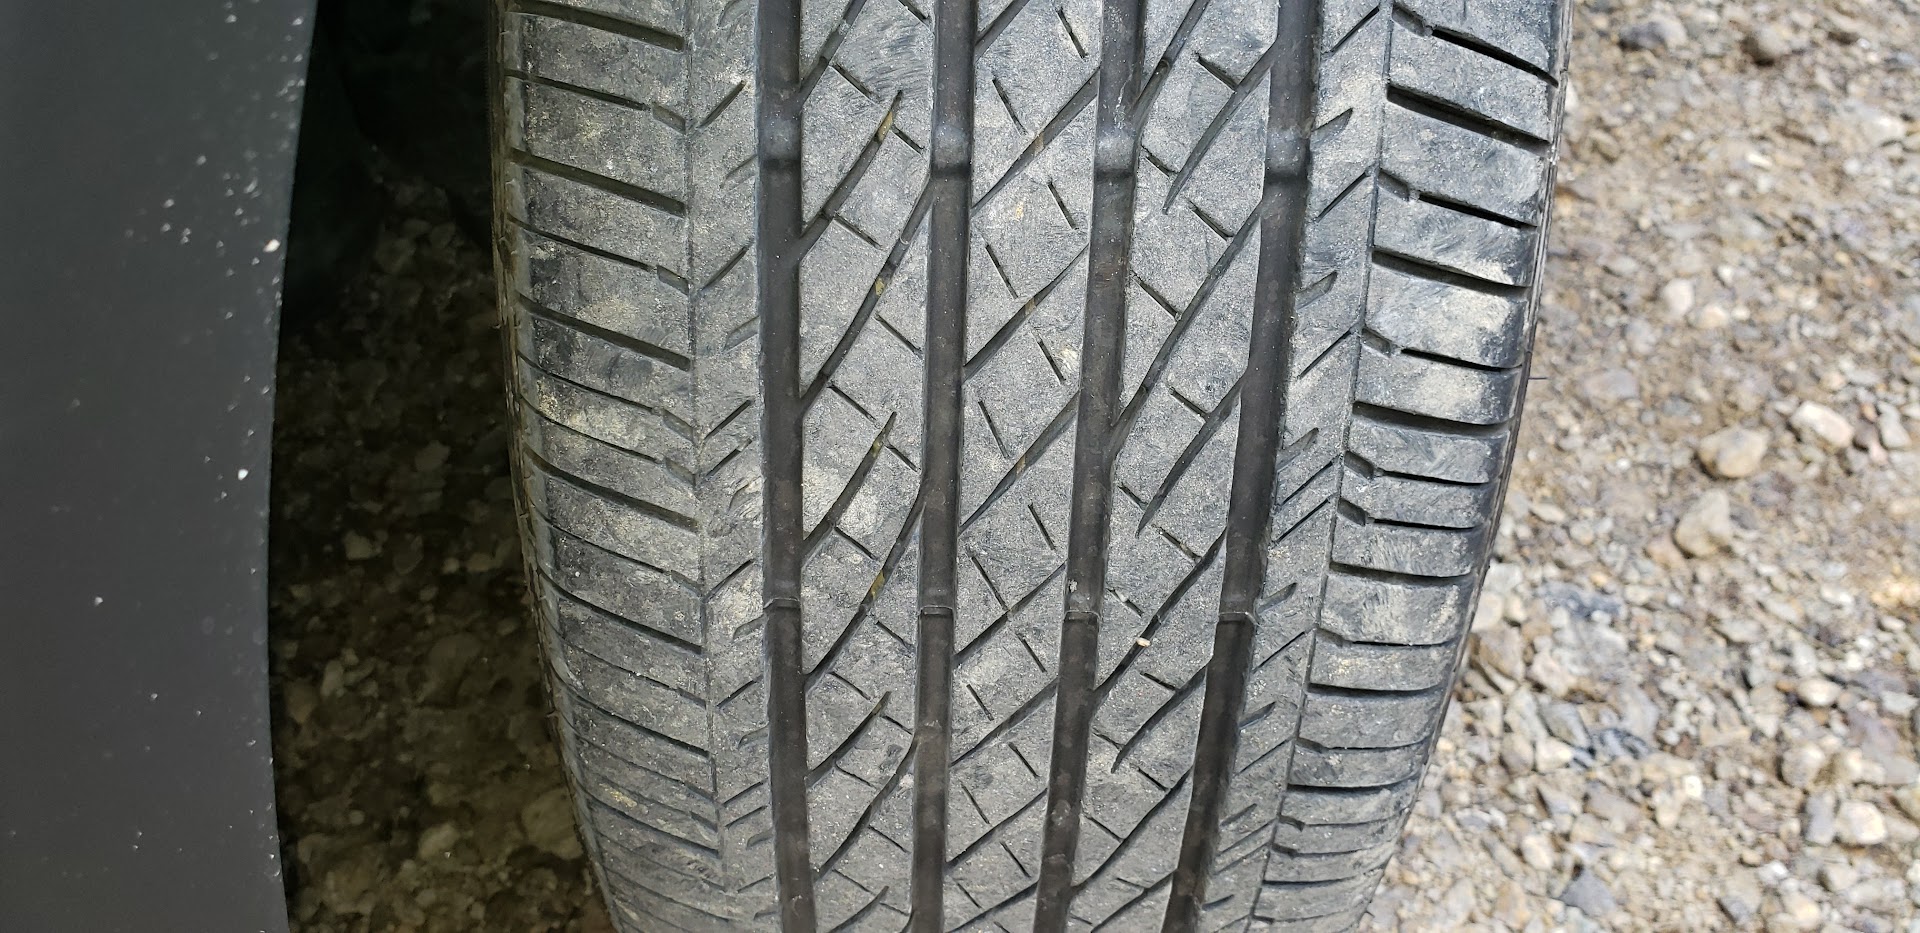 Image of Bridgestone Turanza EL440 tire tread by John Goreham